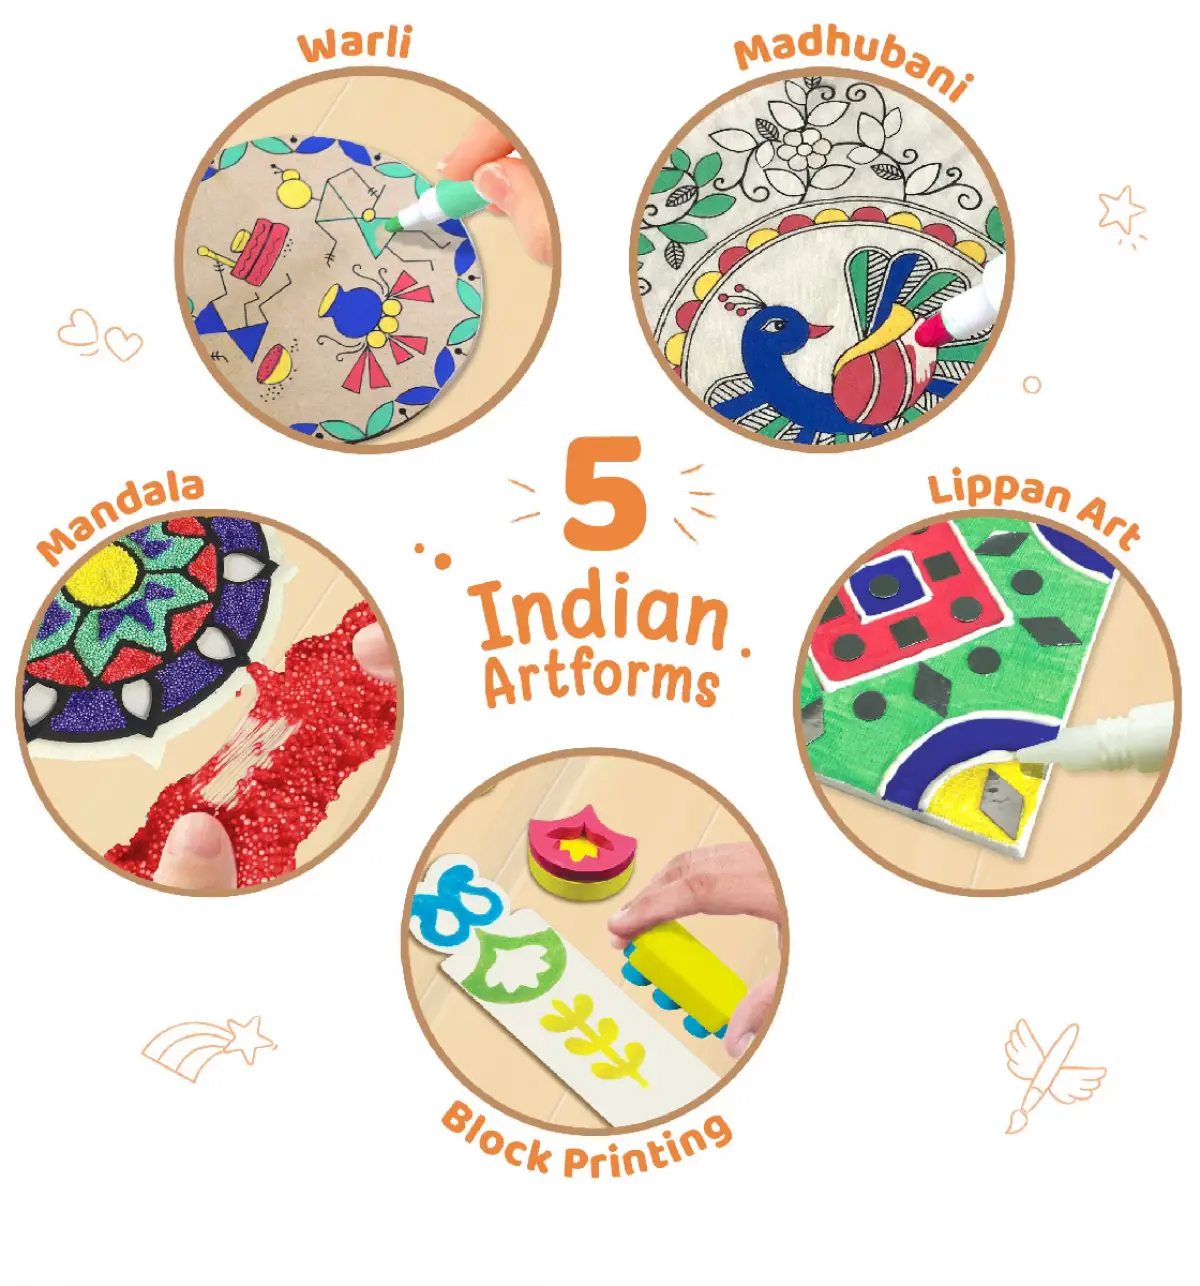 Imagimake Learn Indian Art Forms-Arts and Craft DIY Kit For Kids Learn Creative Crafts, Indian Art Forms-Madhubani, Warli, Lippan, Mandala & Block Printing Arts, Kids for 8Y+, Multicolour